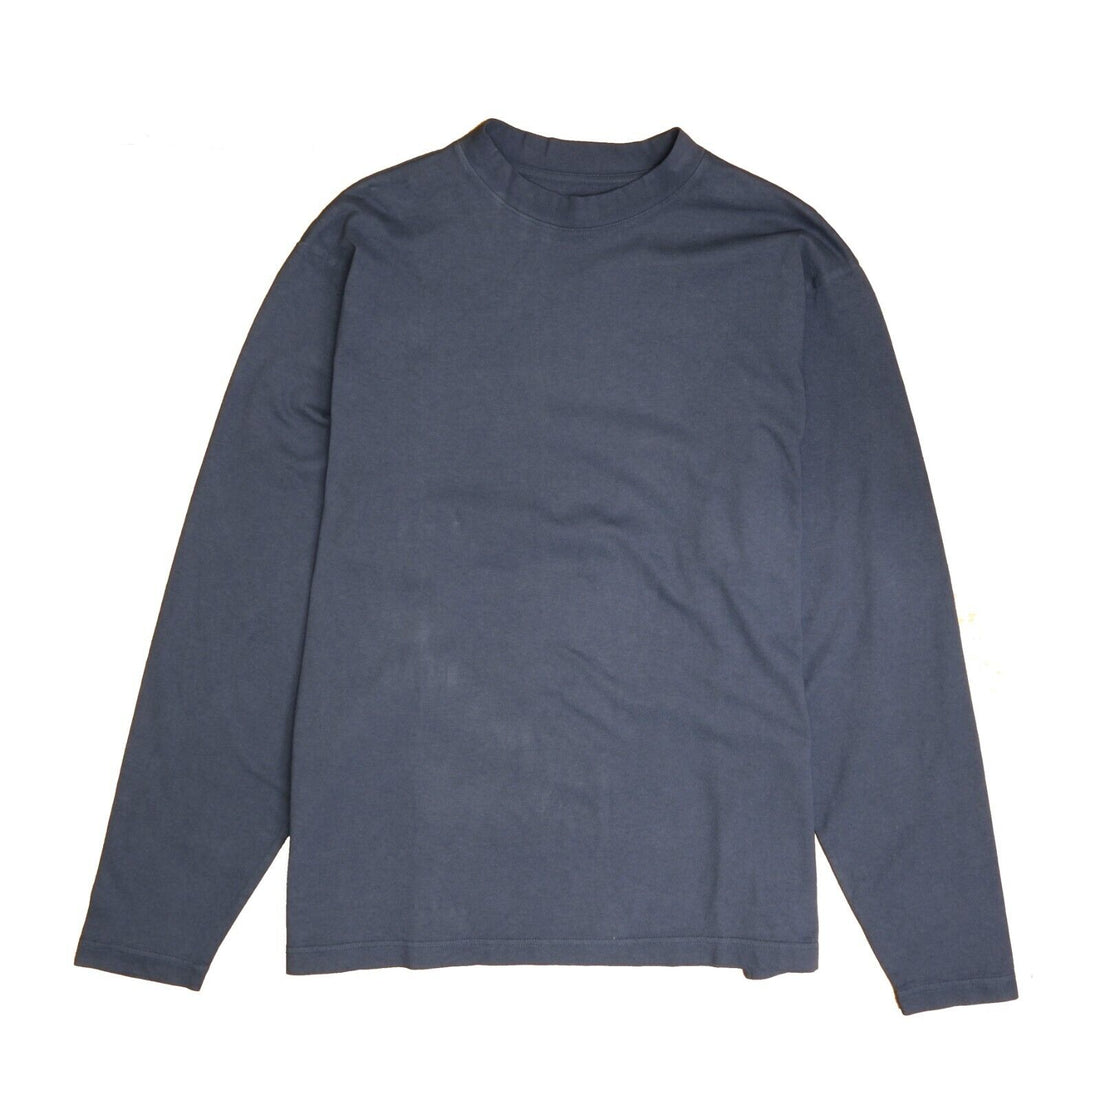 Yeezy Gap Unreleased Long Sleeve T-Shirt Size Large Navy Blue